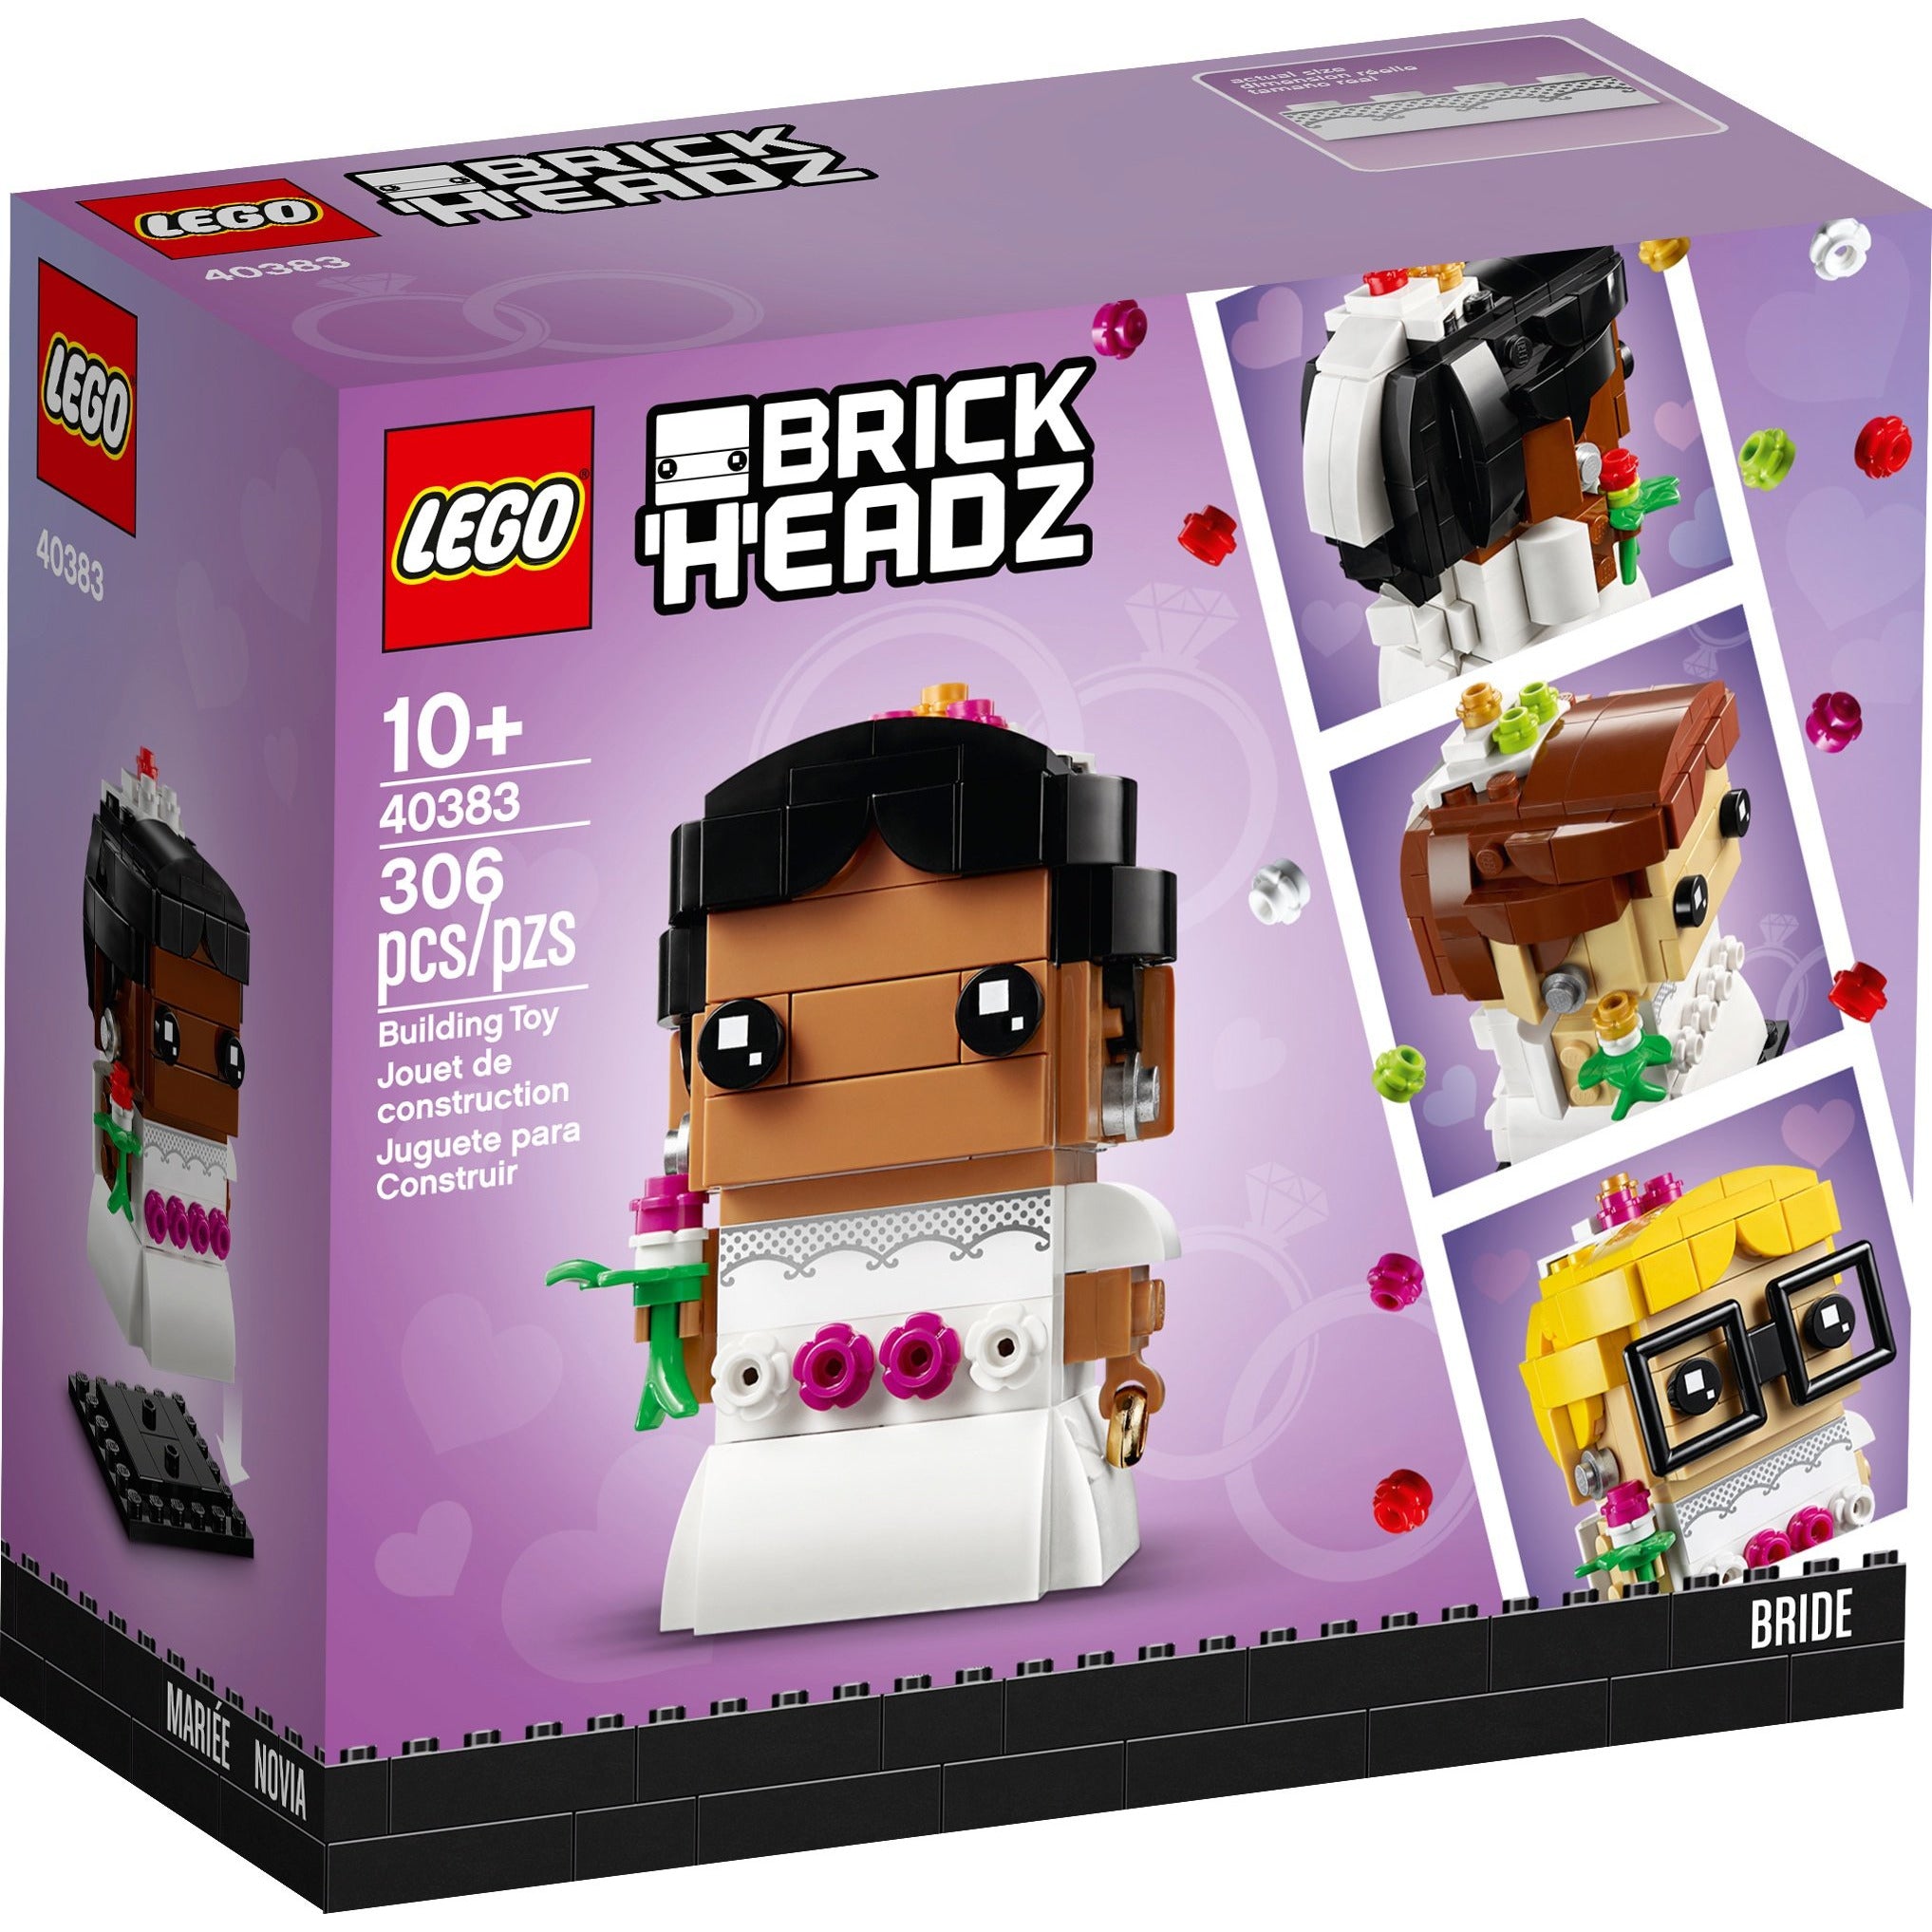 Lego Brickheadz: Wedding Bride 40383